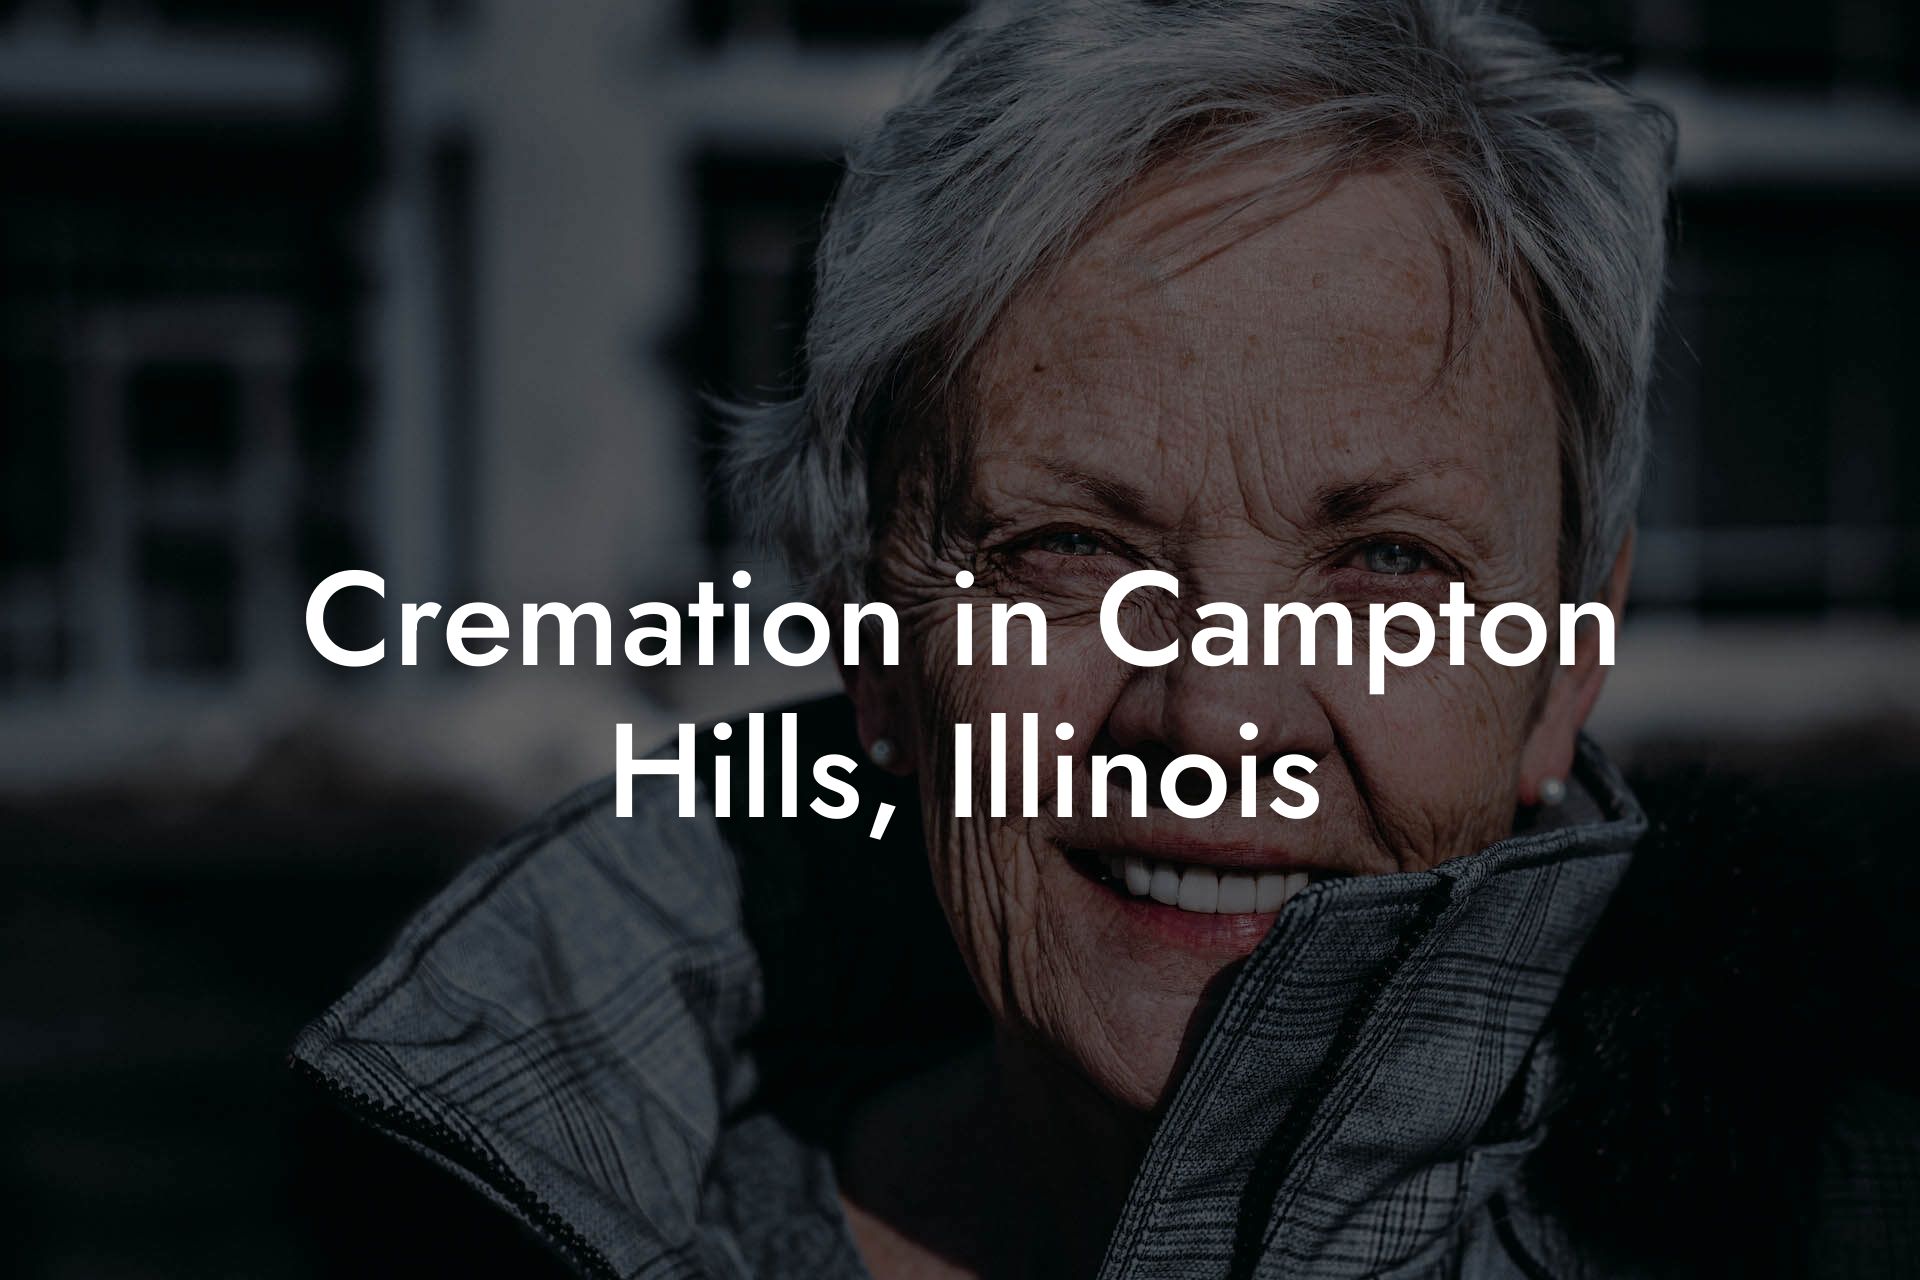 Cremation in Campton Hills, Illinois